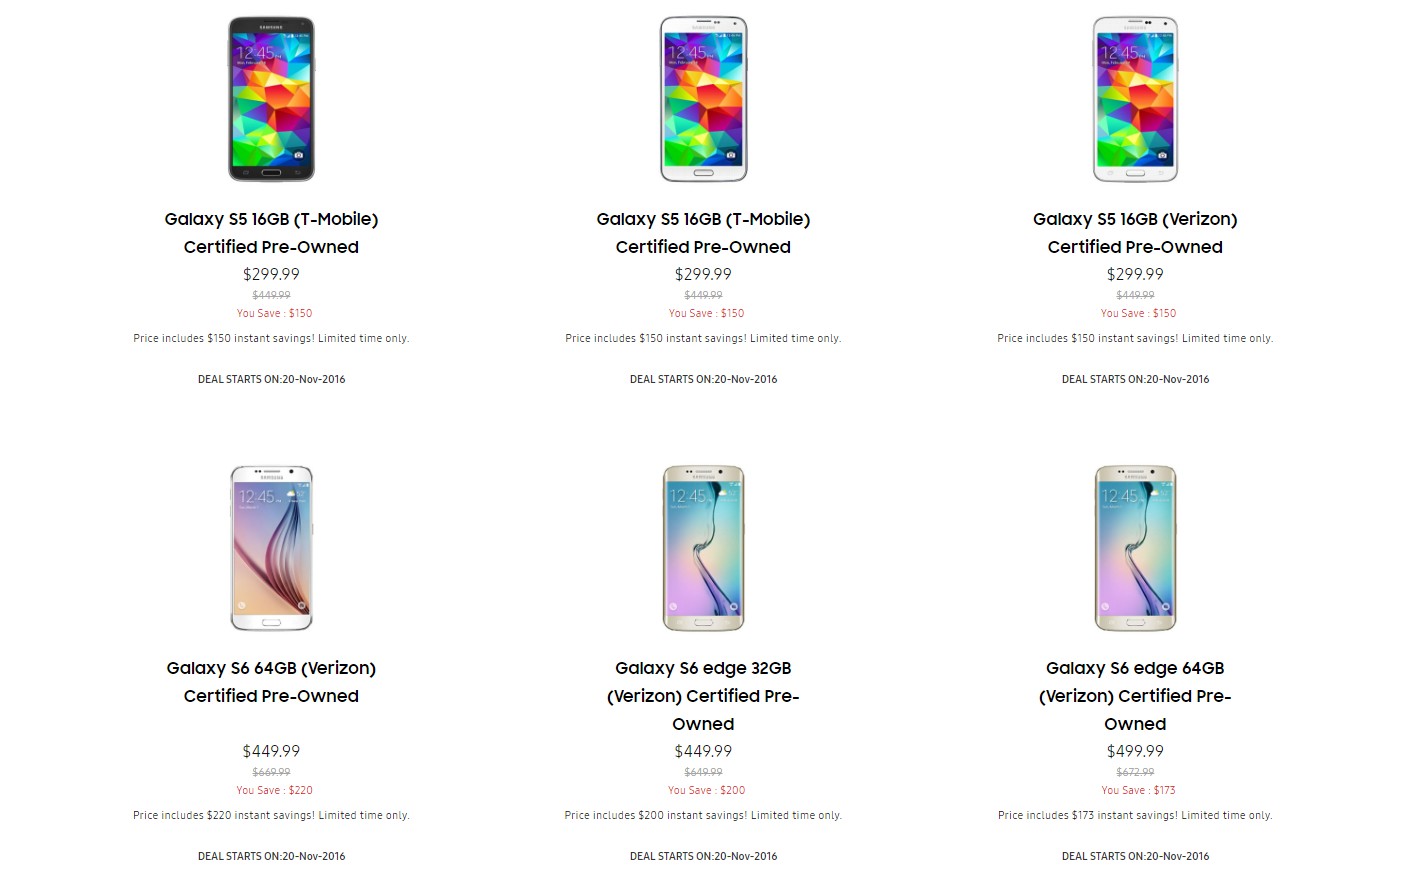 Samsung Reveals Full List of Black Friday Deals in the U.S. - Will There Be Black Friday Deals On Samsumg Phones